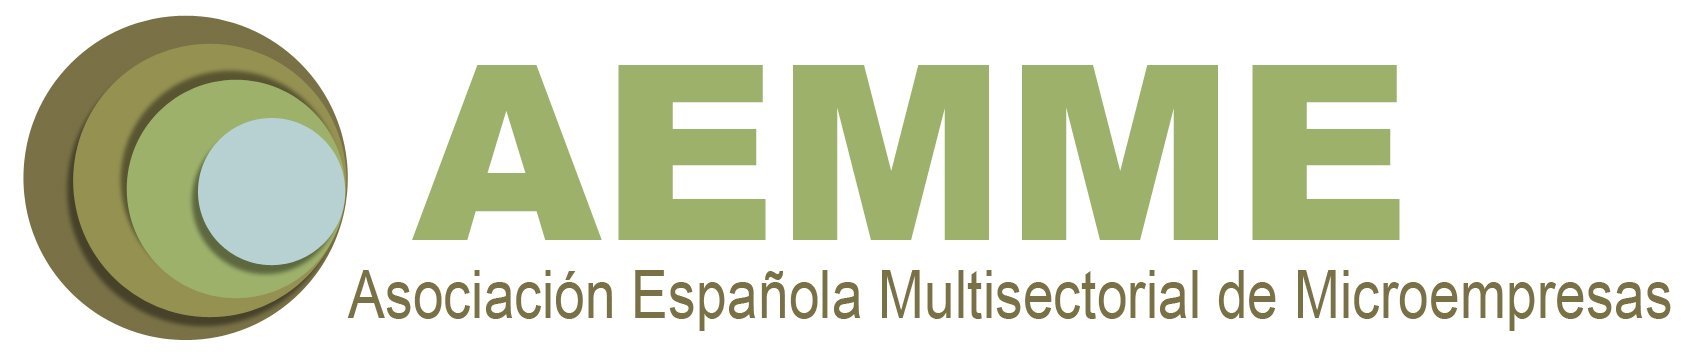 logo-AEMME-imprenta